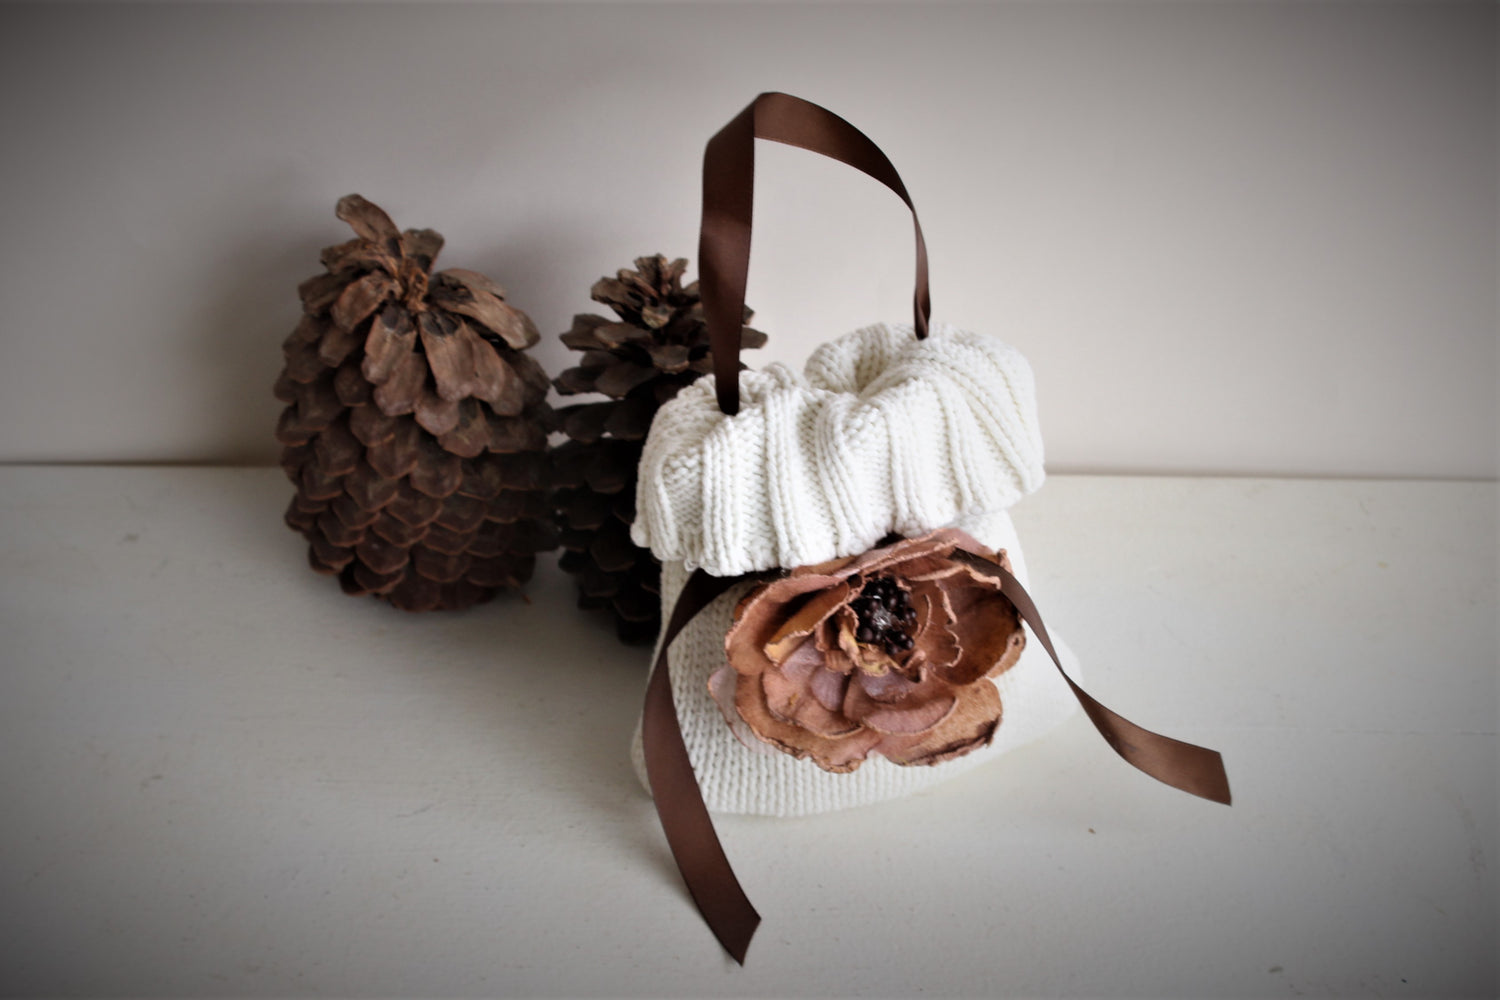 "Cinna-bun" Knitted Cinnamon Roll Scented Hanging Sachet